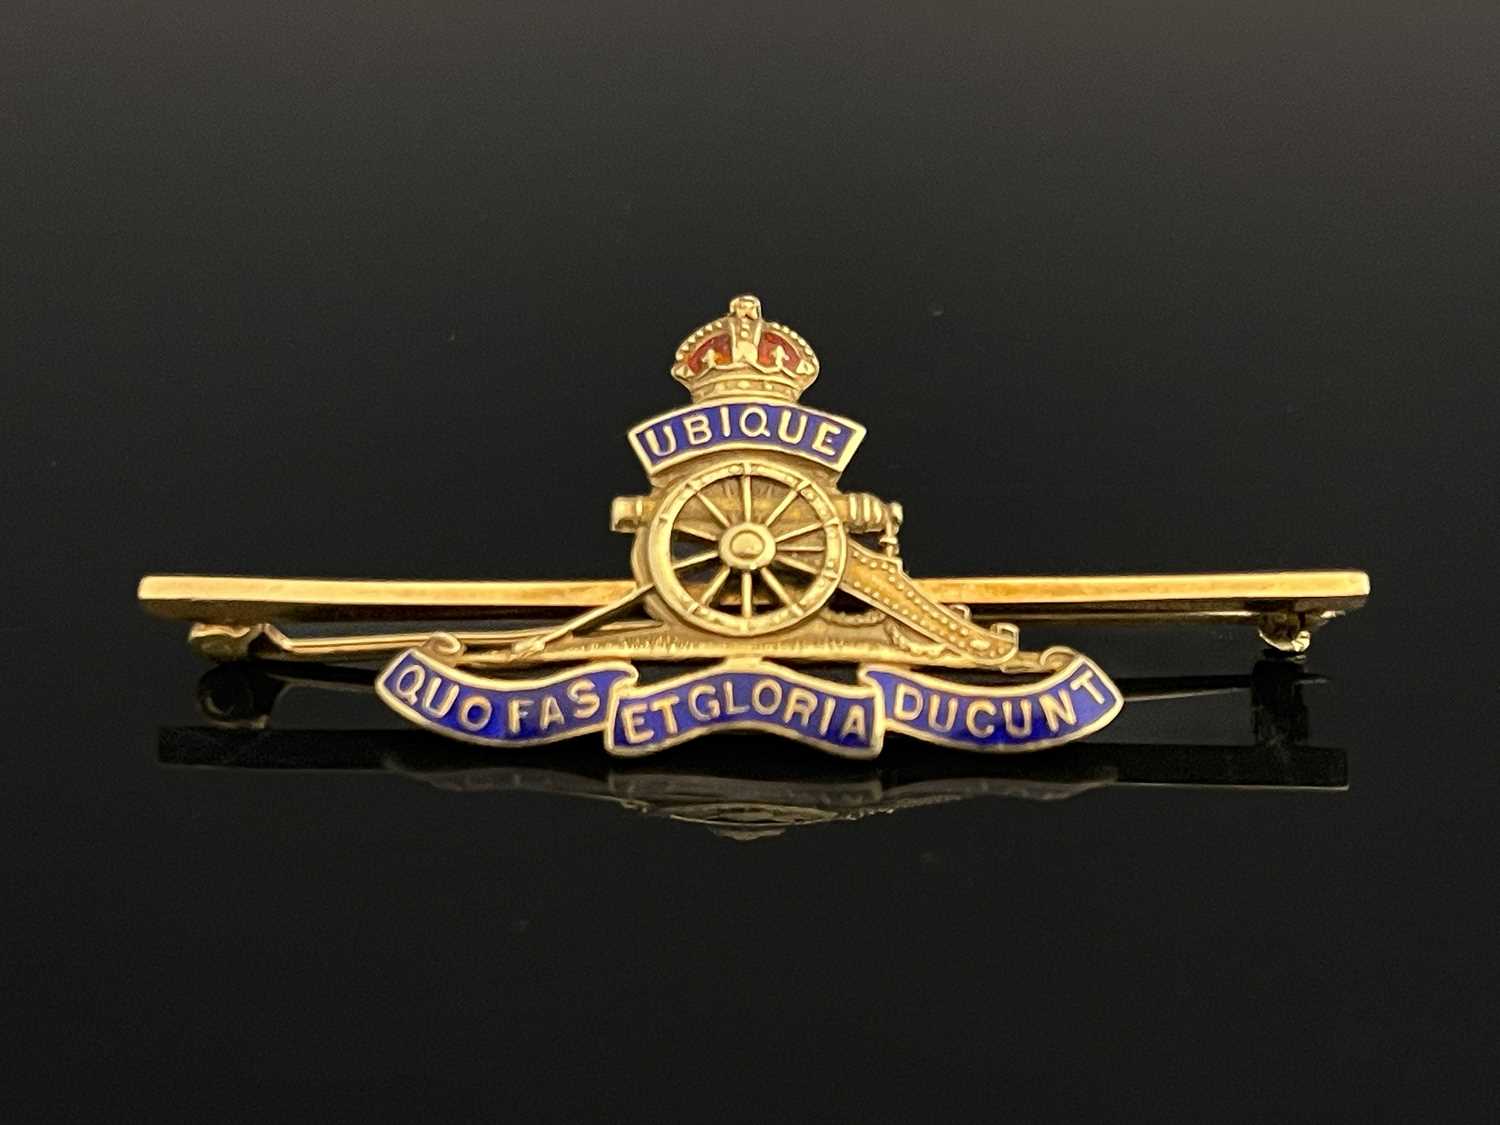 A 15 carat gold and enamelled Royal Artillery bar brooch, cast and pierced emblem with blue enamel